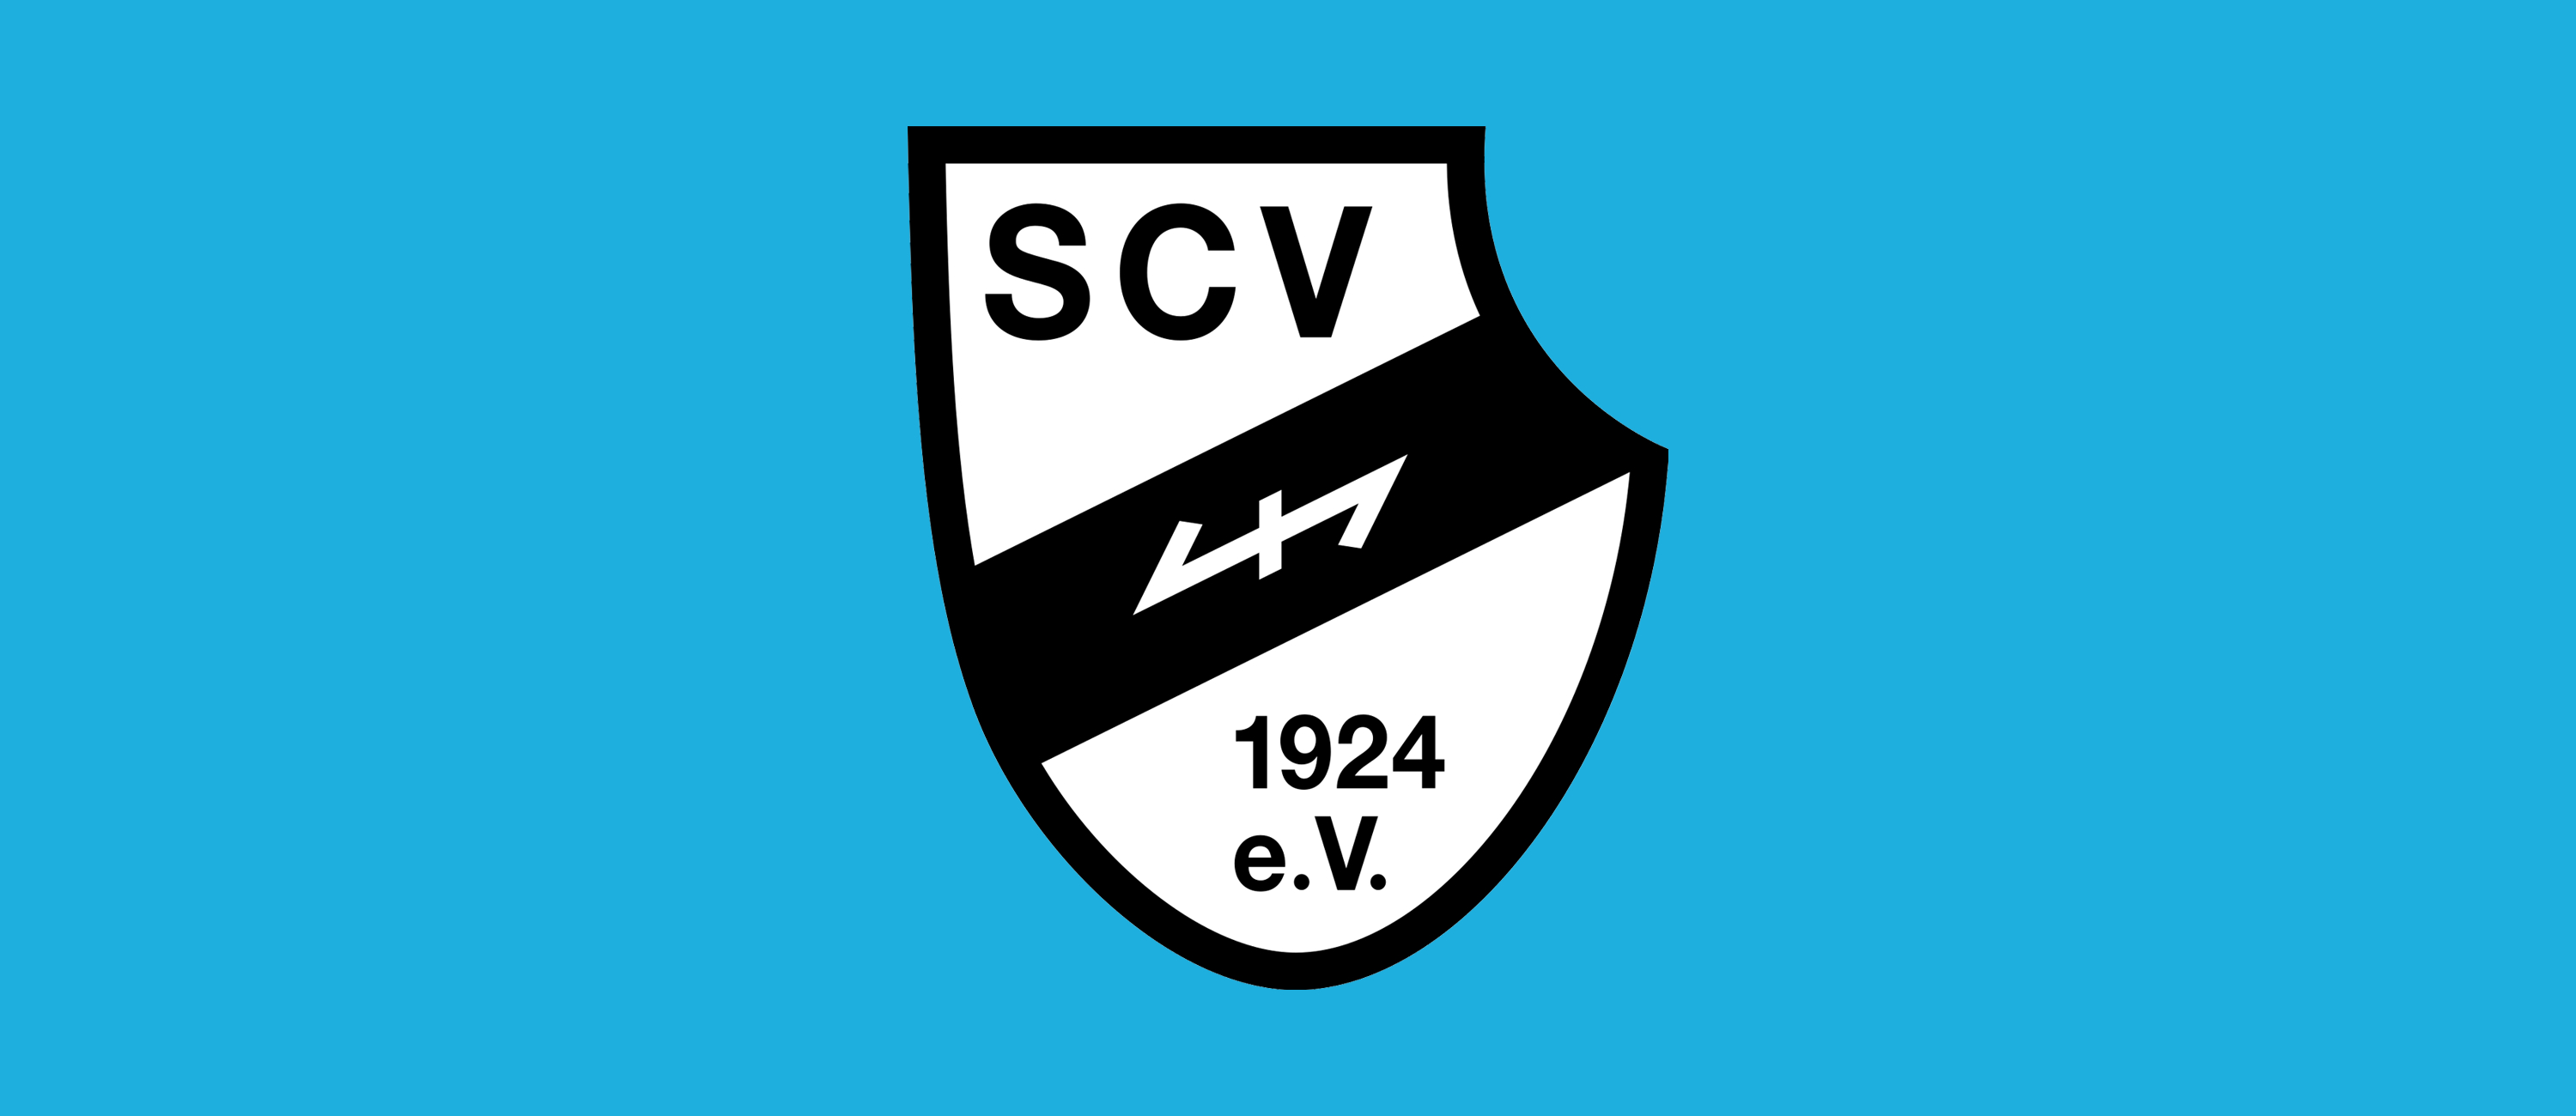 sc-verl-10-football-club-facts